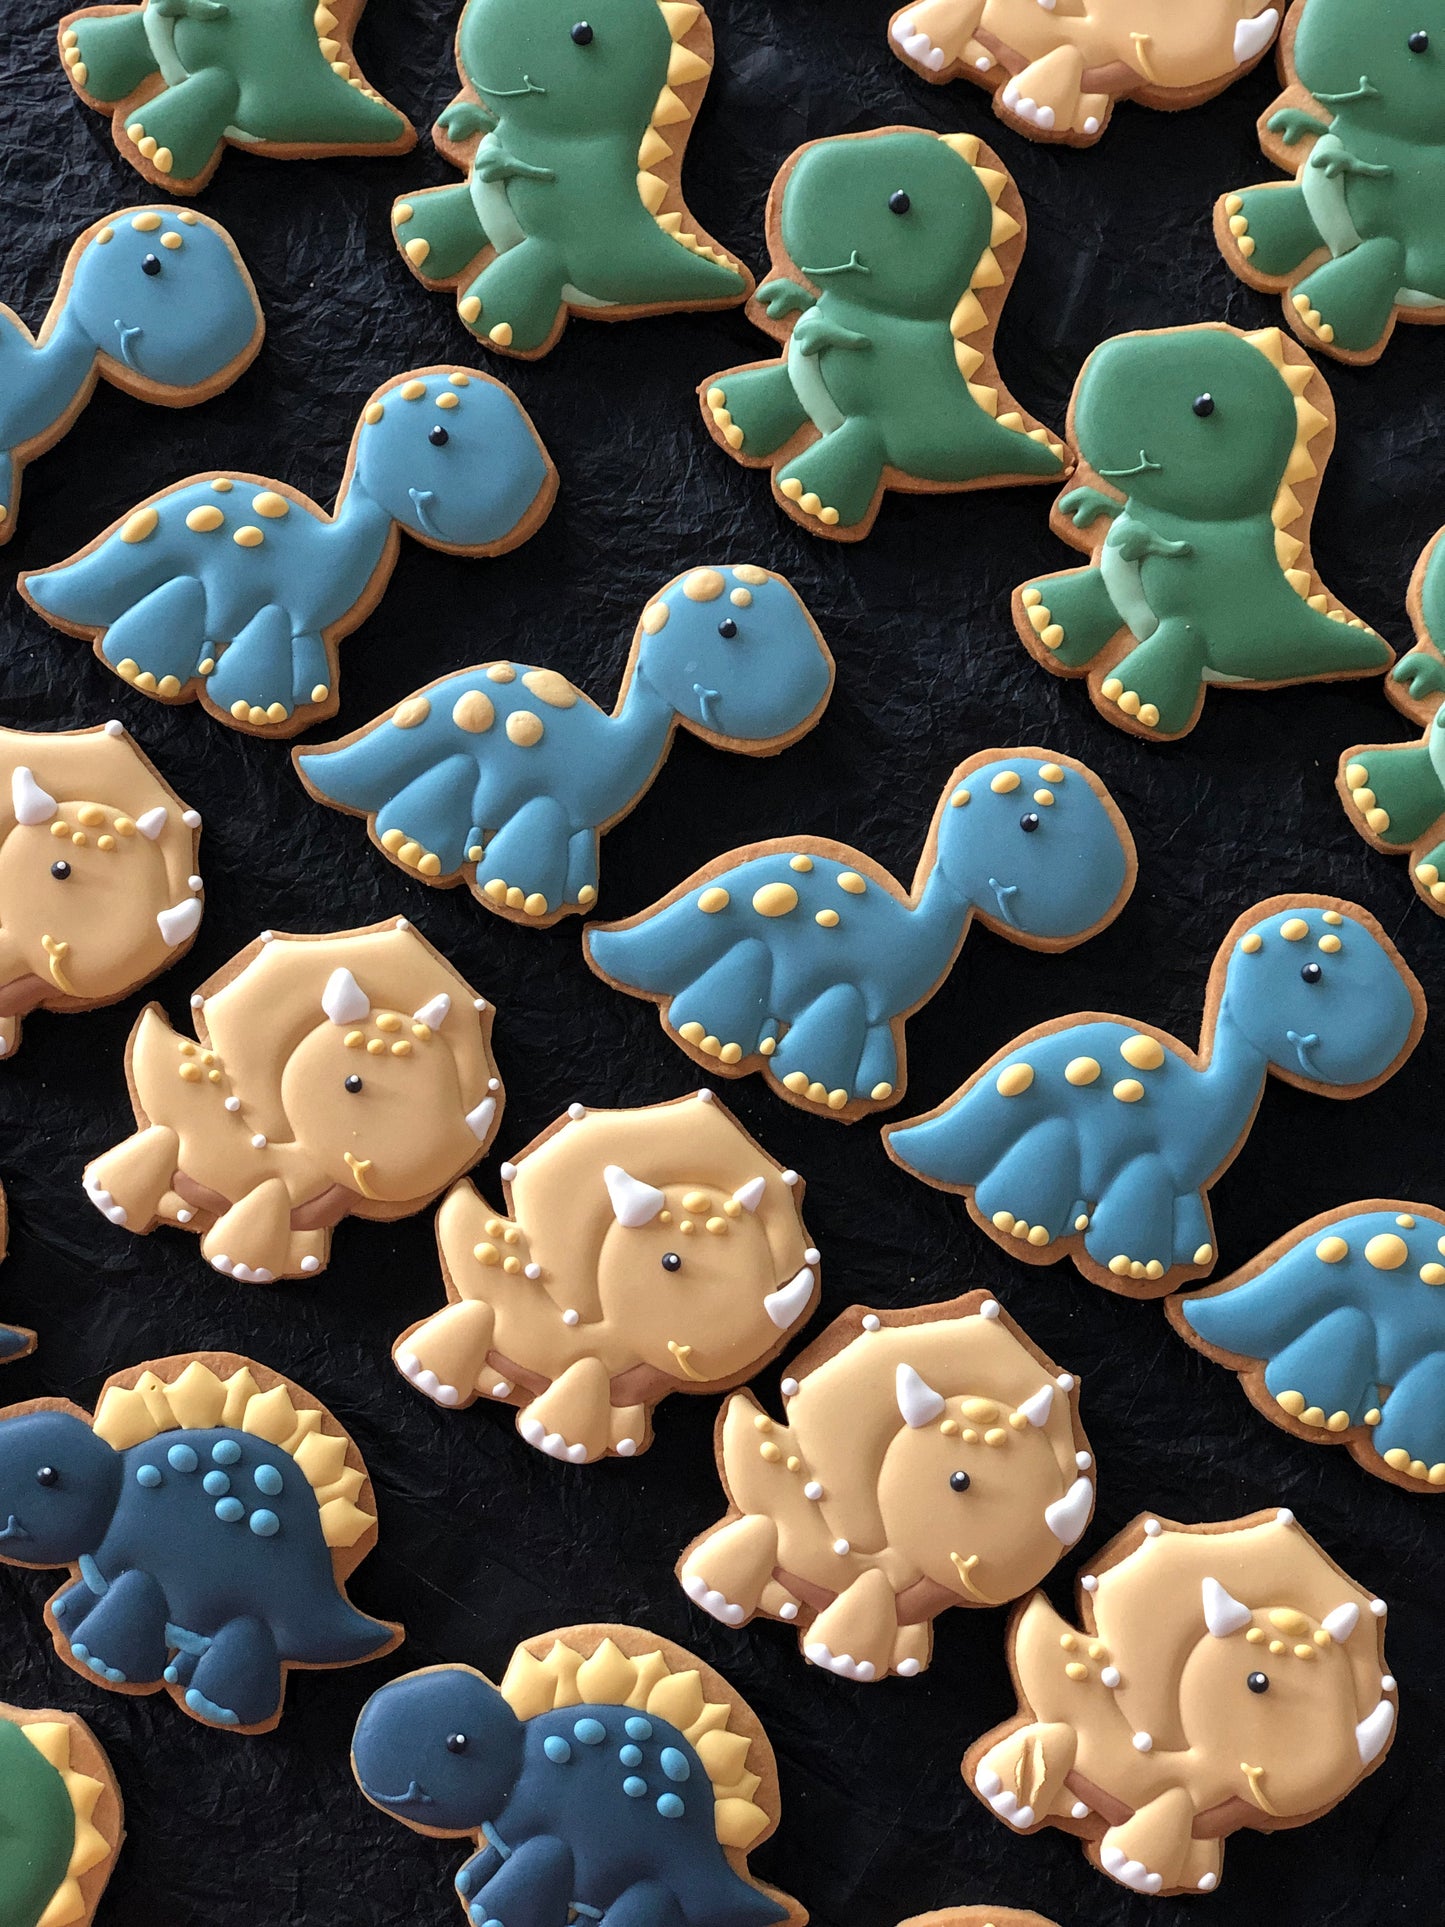 Custom made cookies